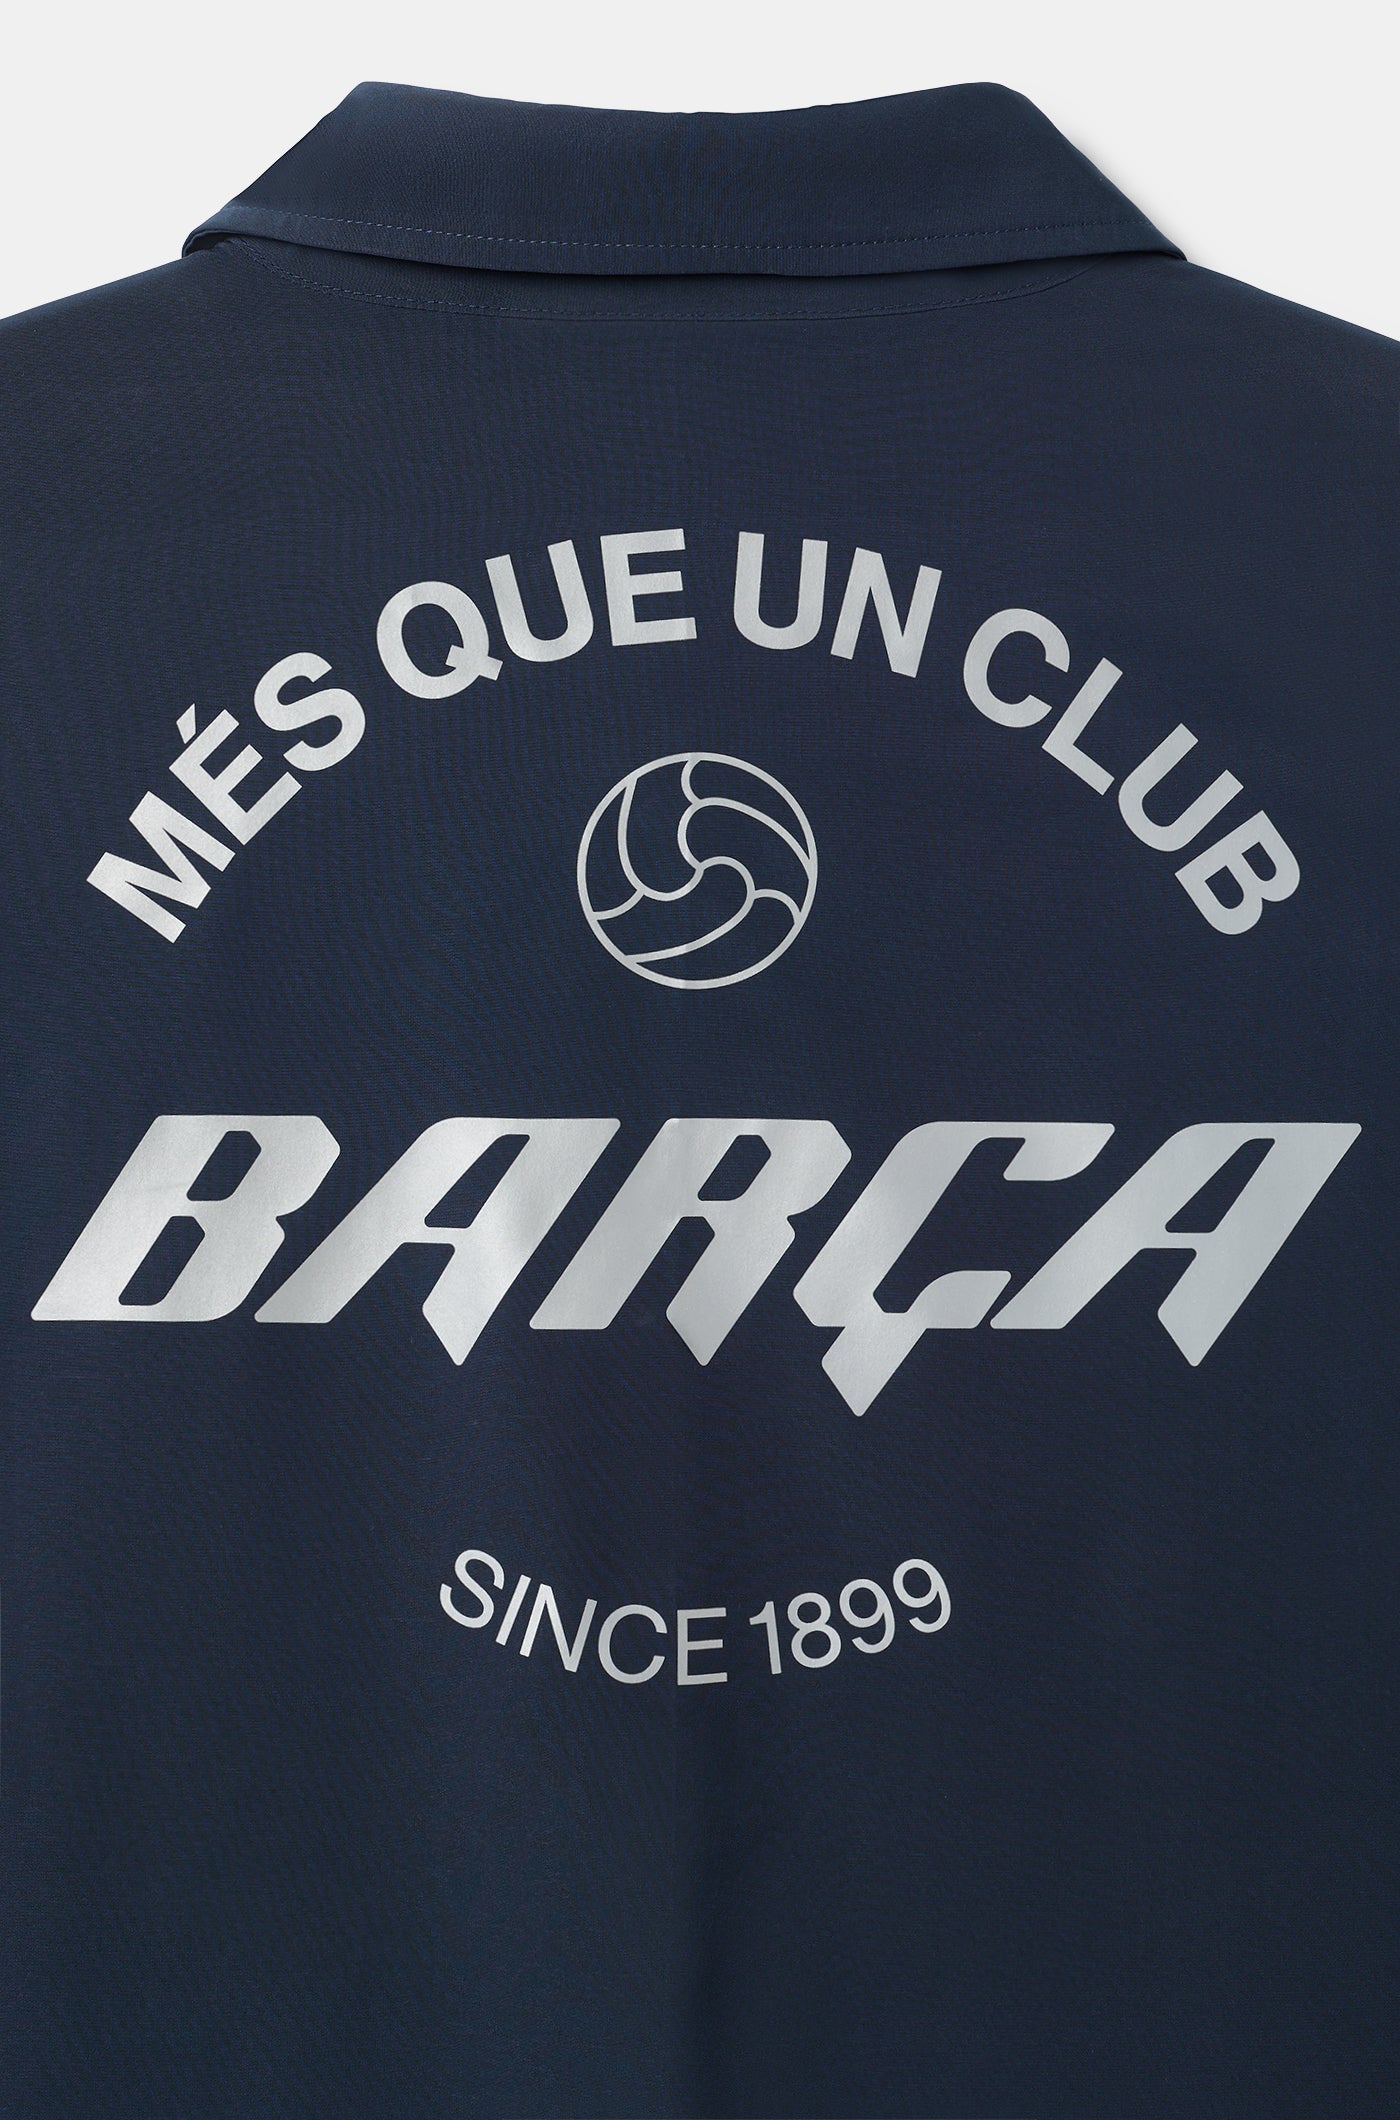 FC Barcelona buttoned jacket